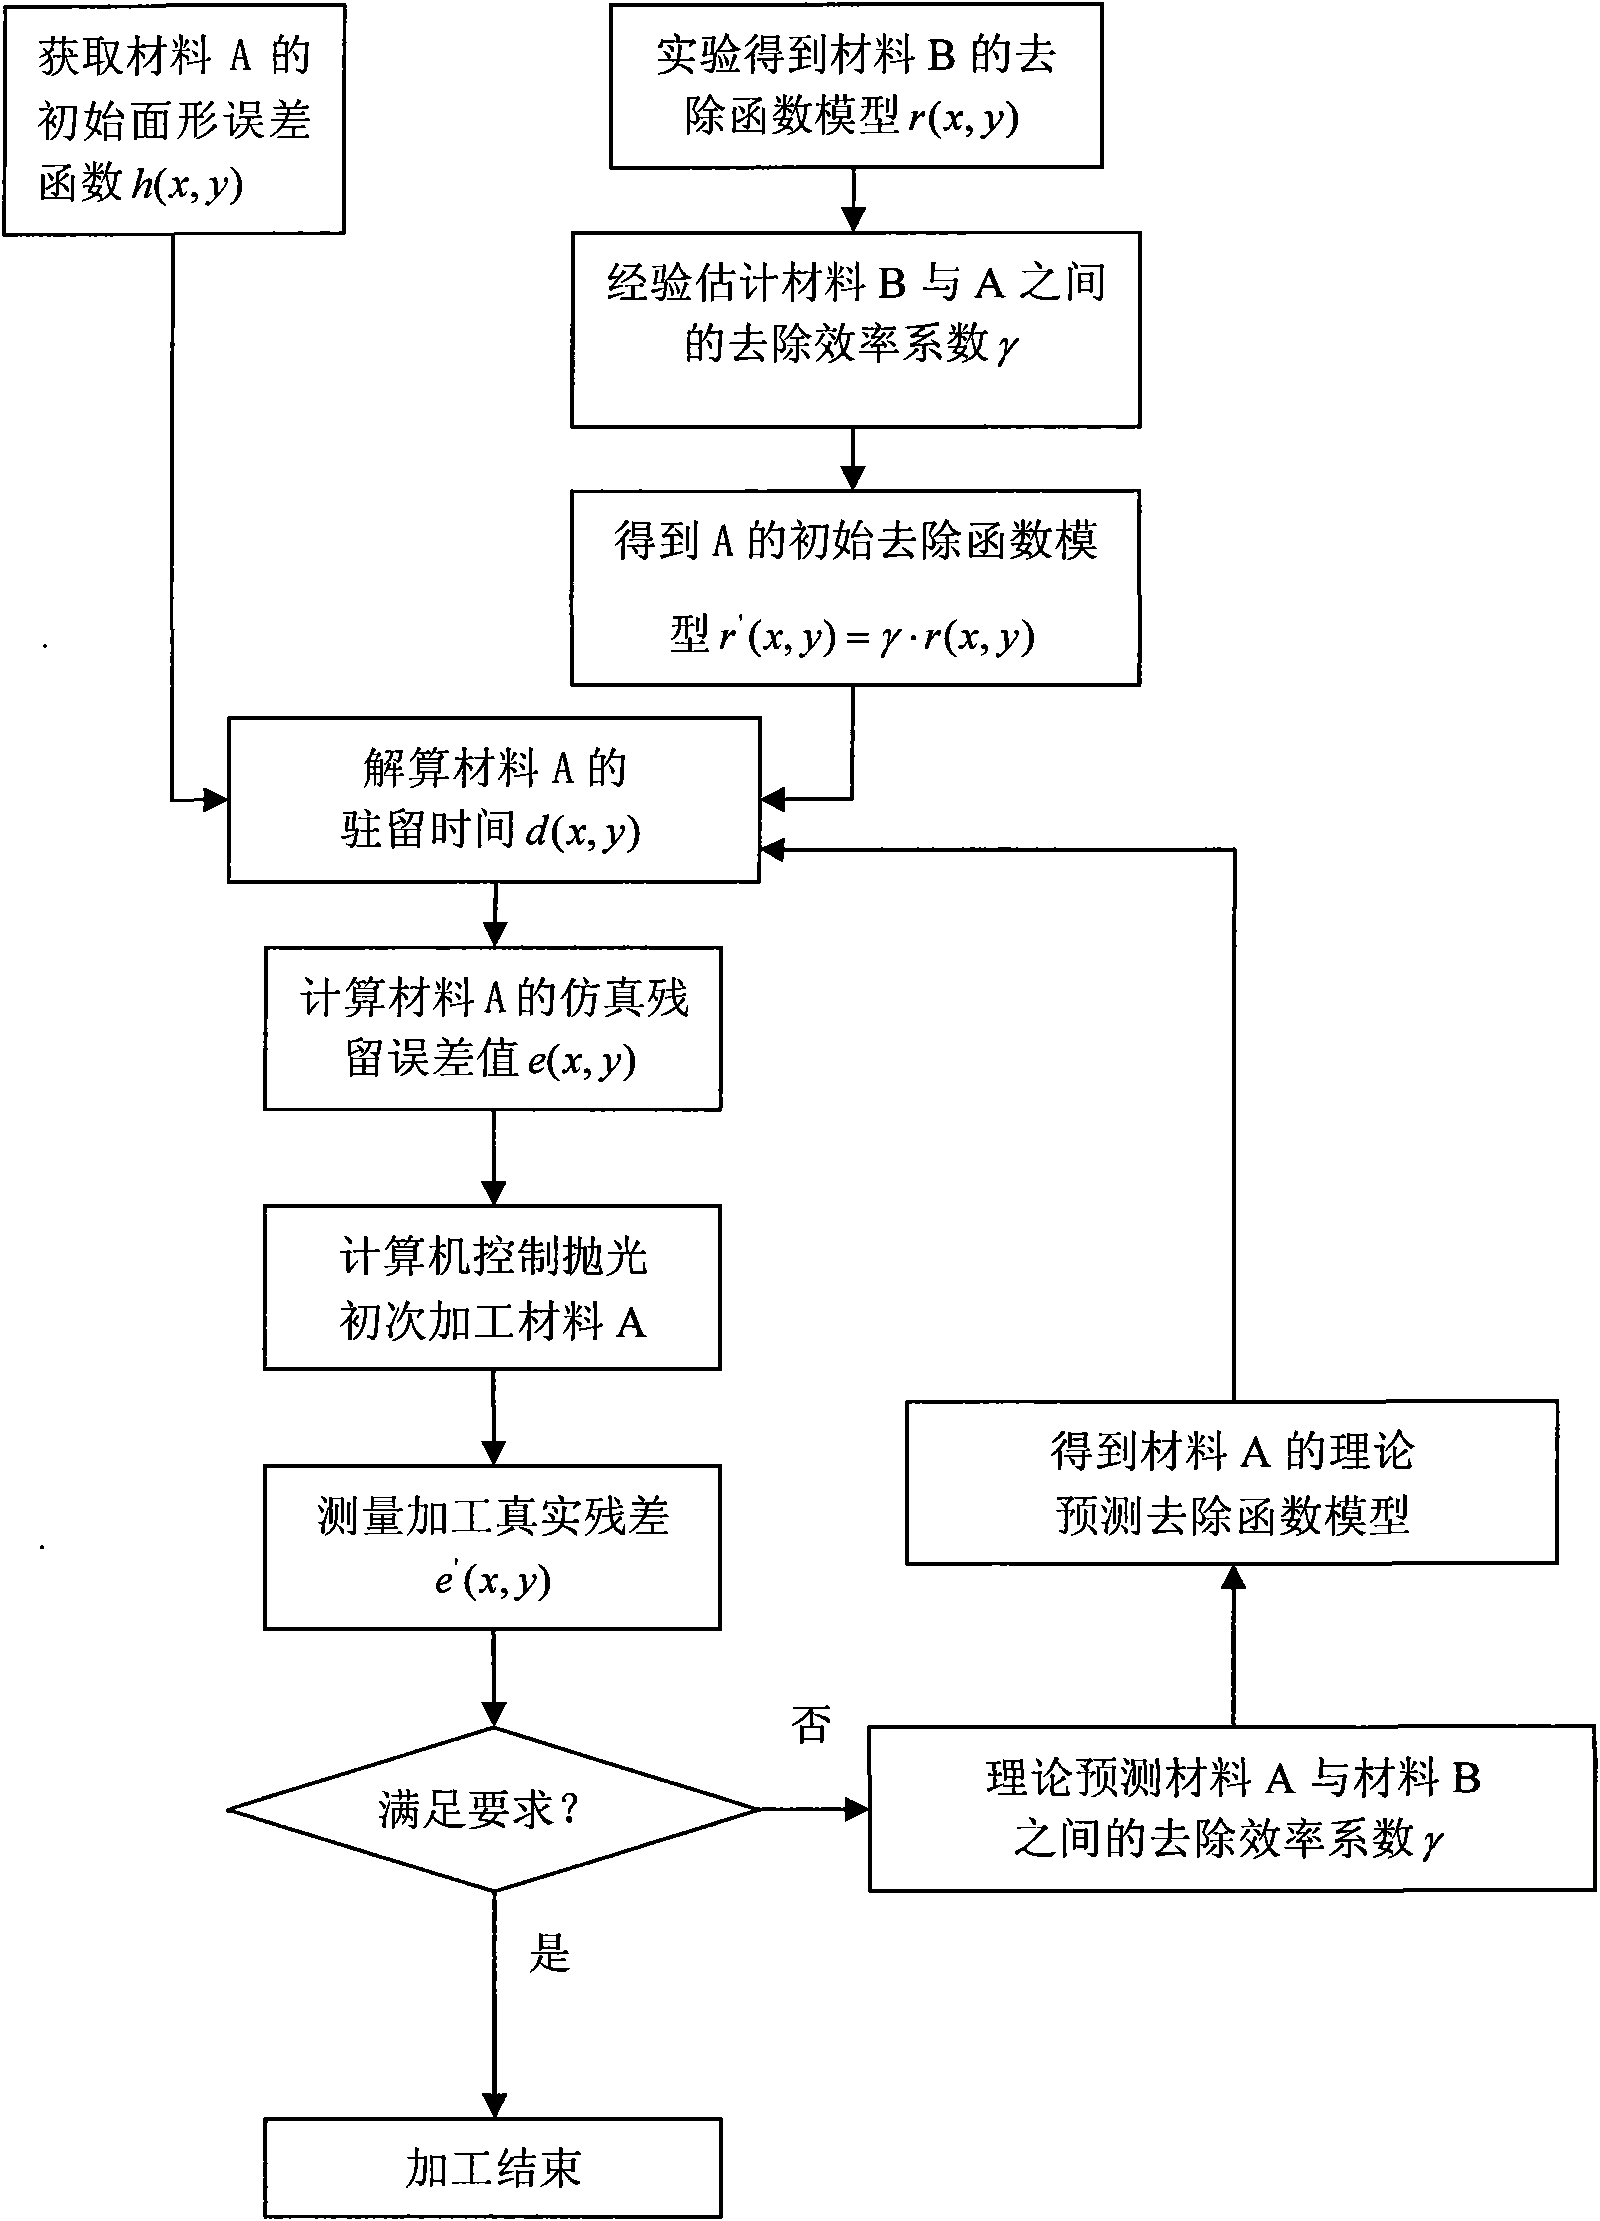 Computer-control polishing method based on removal function prediction model